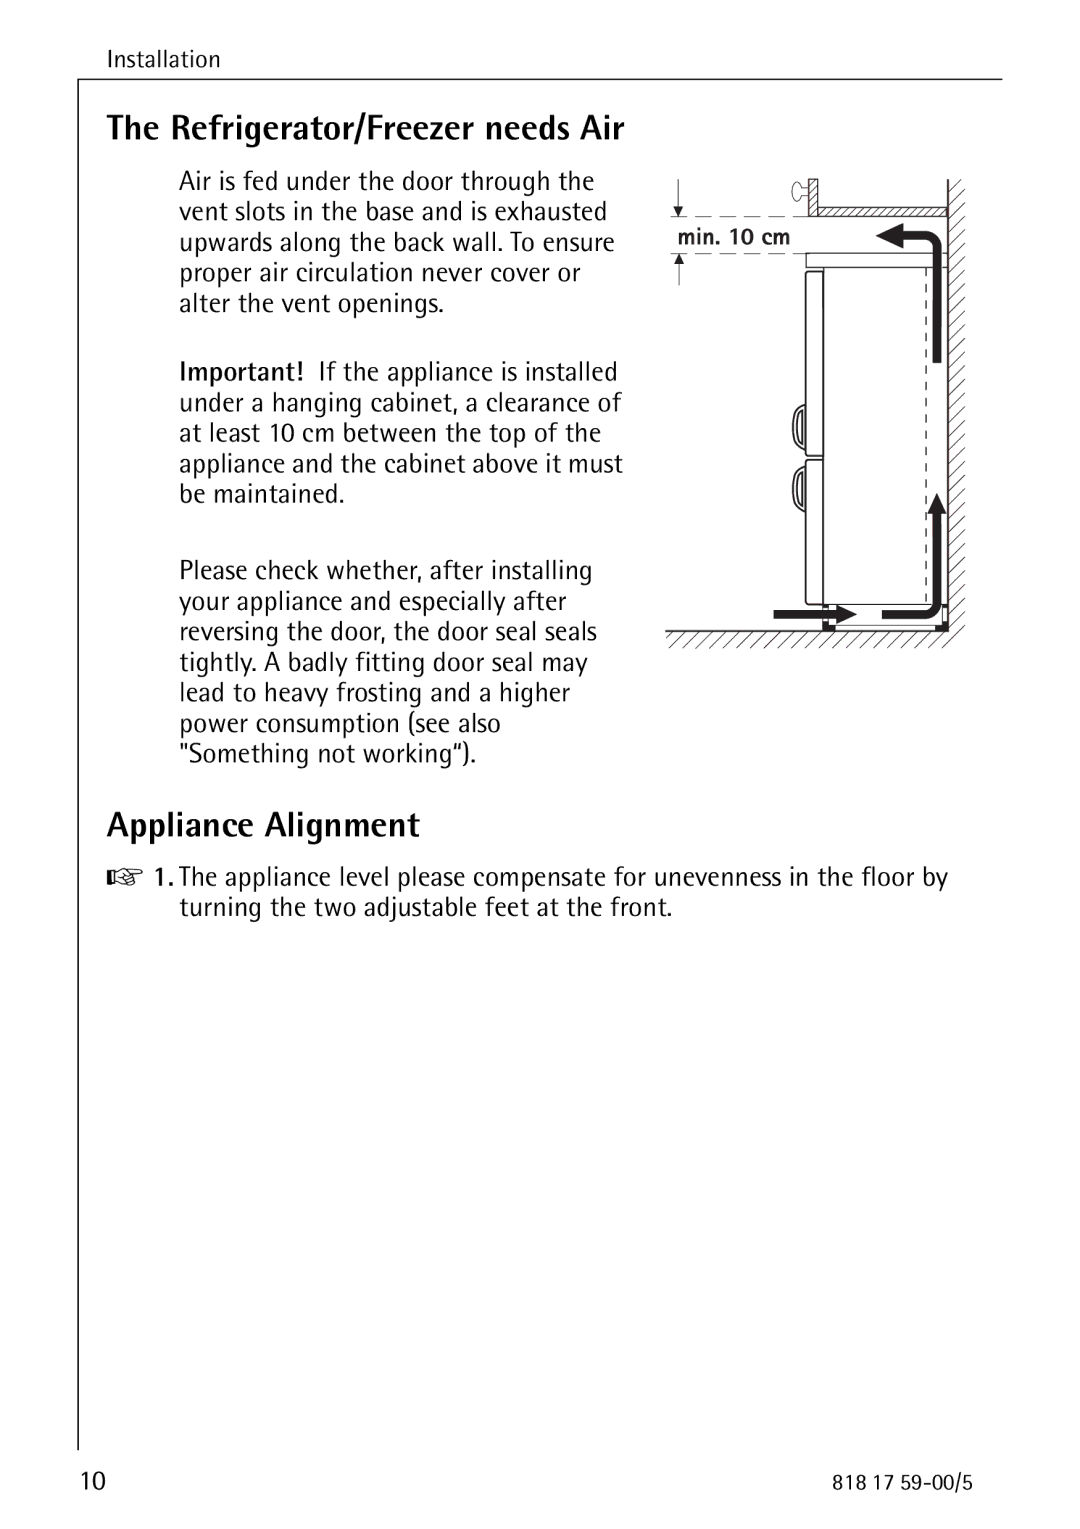 AEG 3150-7 KG manual Refrigerator/Freezer needs Air, Appliance Alignment 